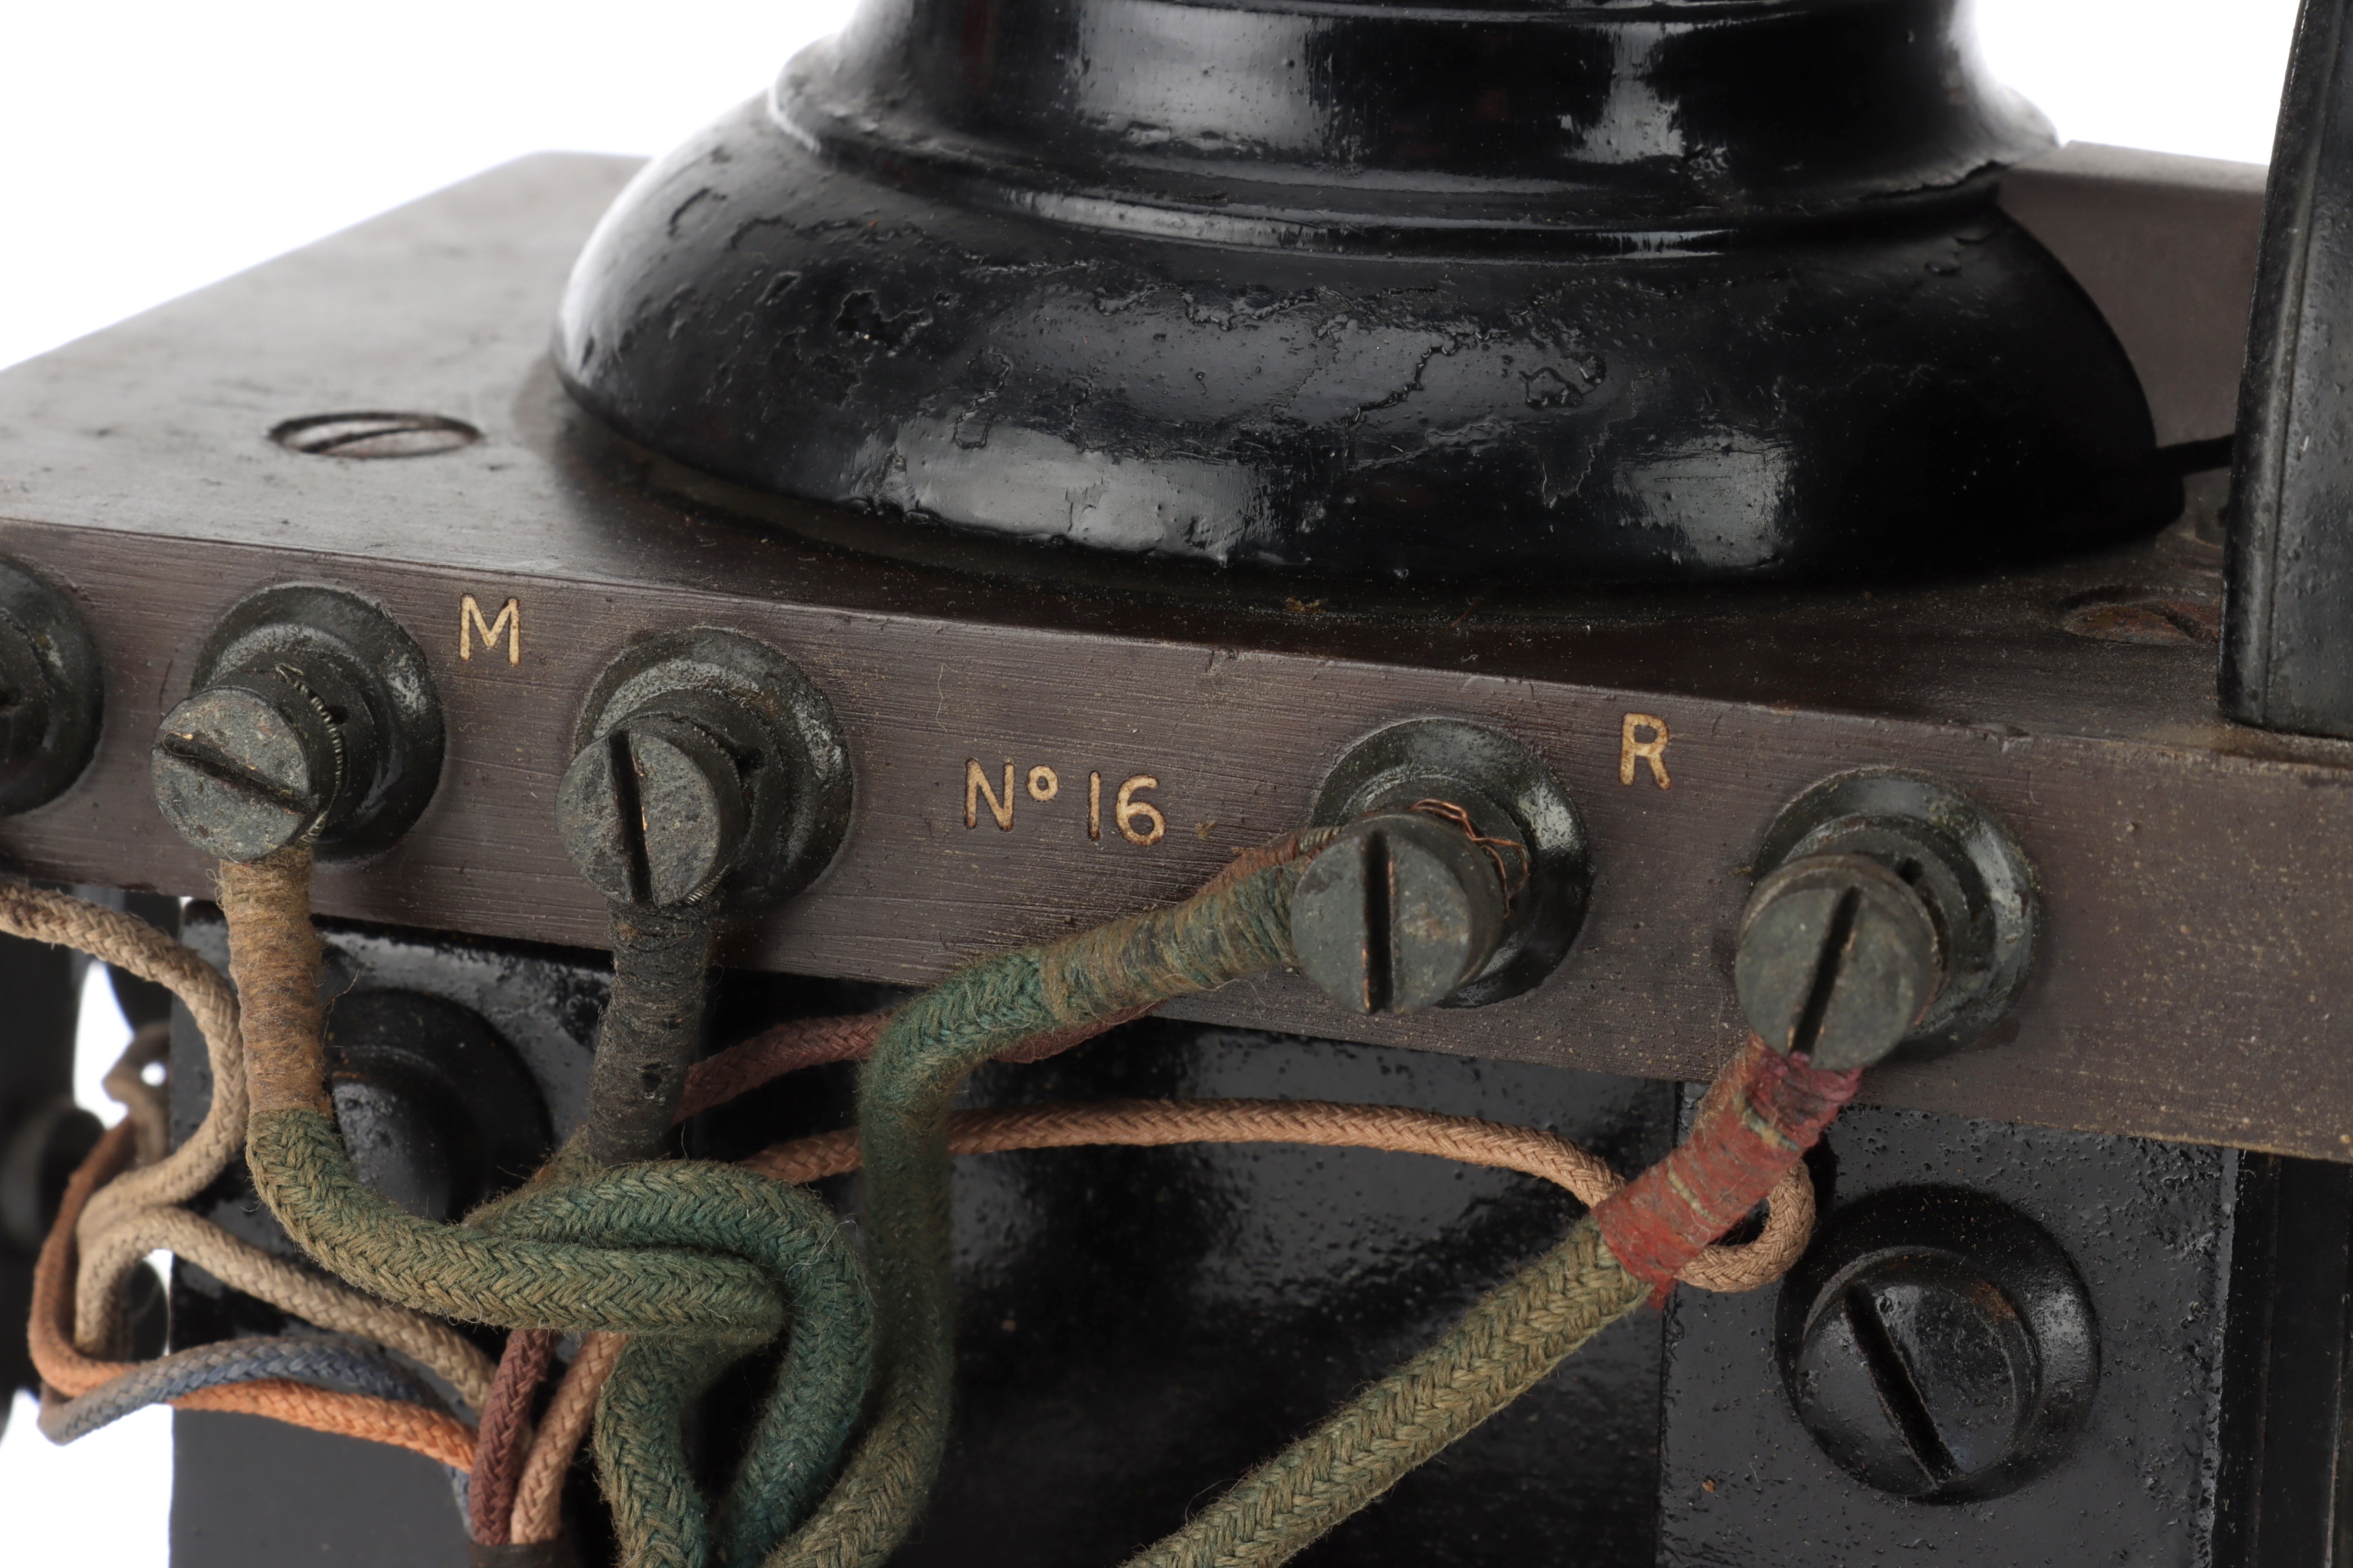 An Ericsson No.16 Skeleton Telephone, - Image 4 of 8